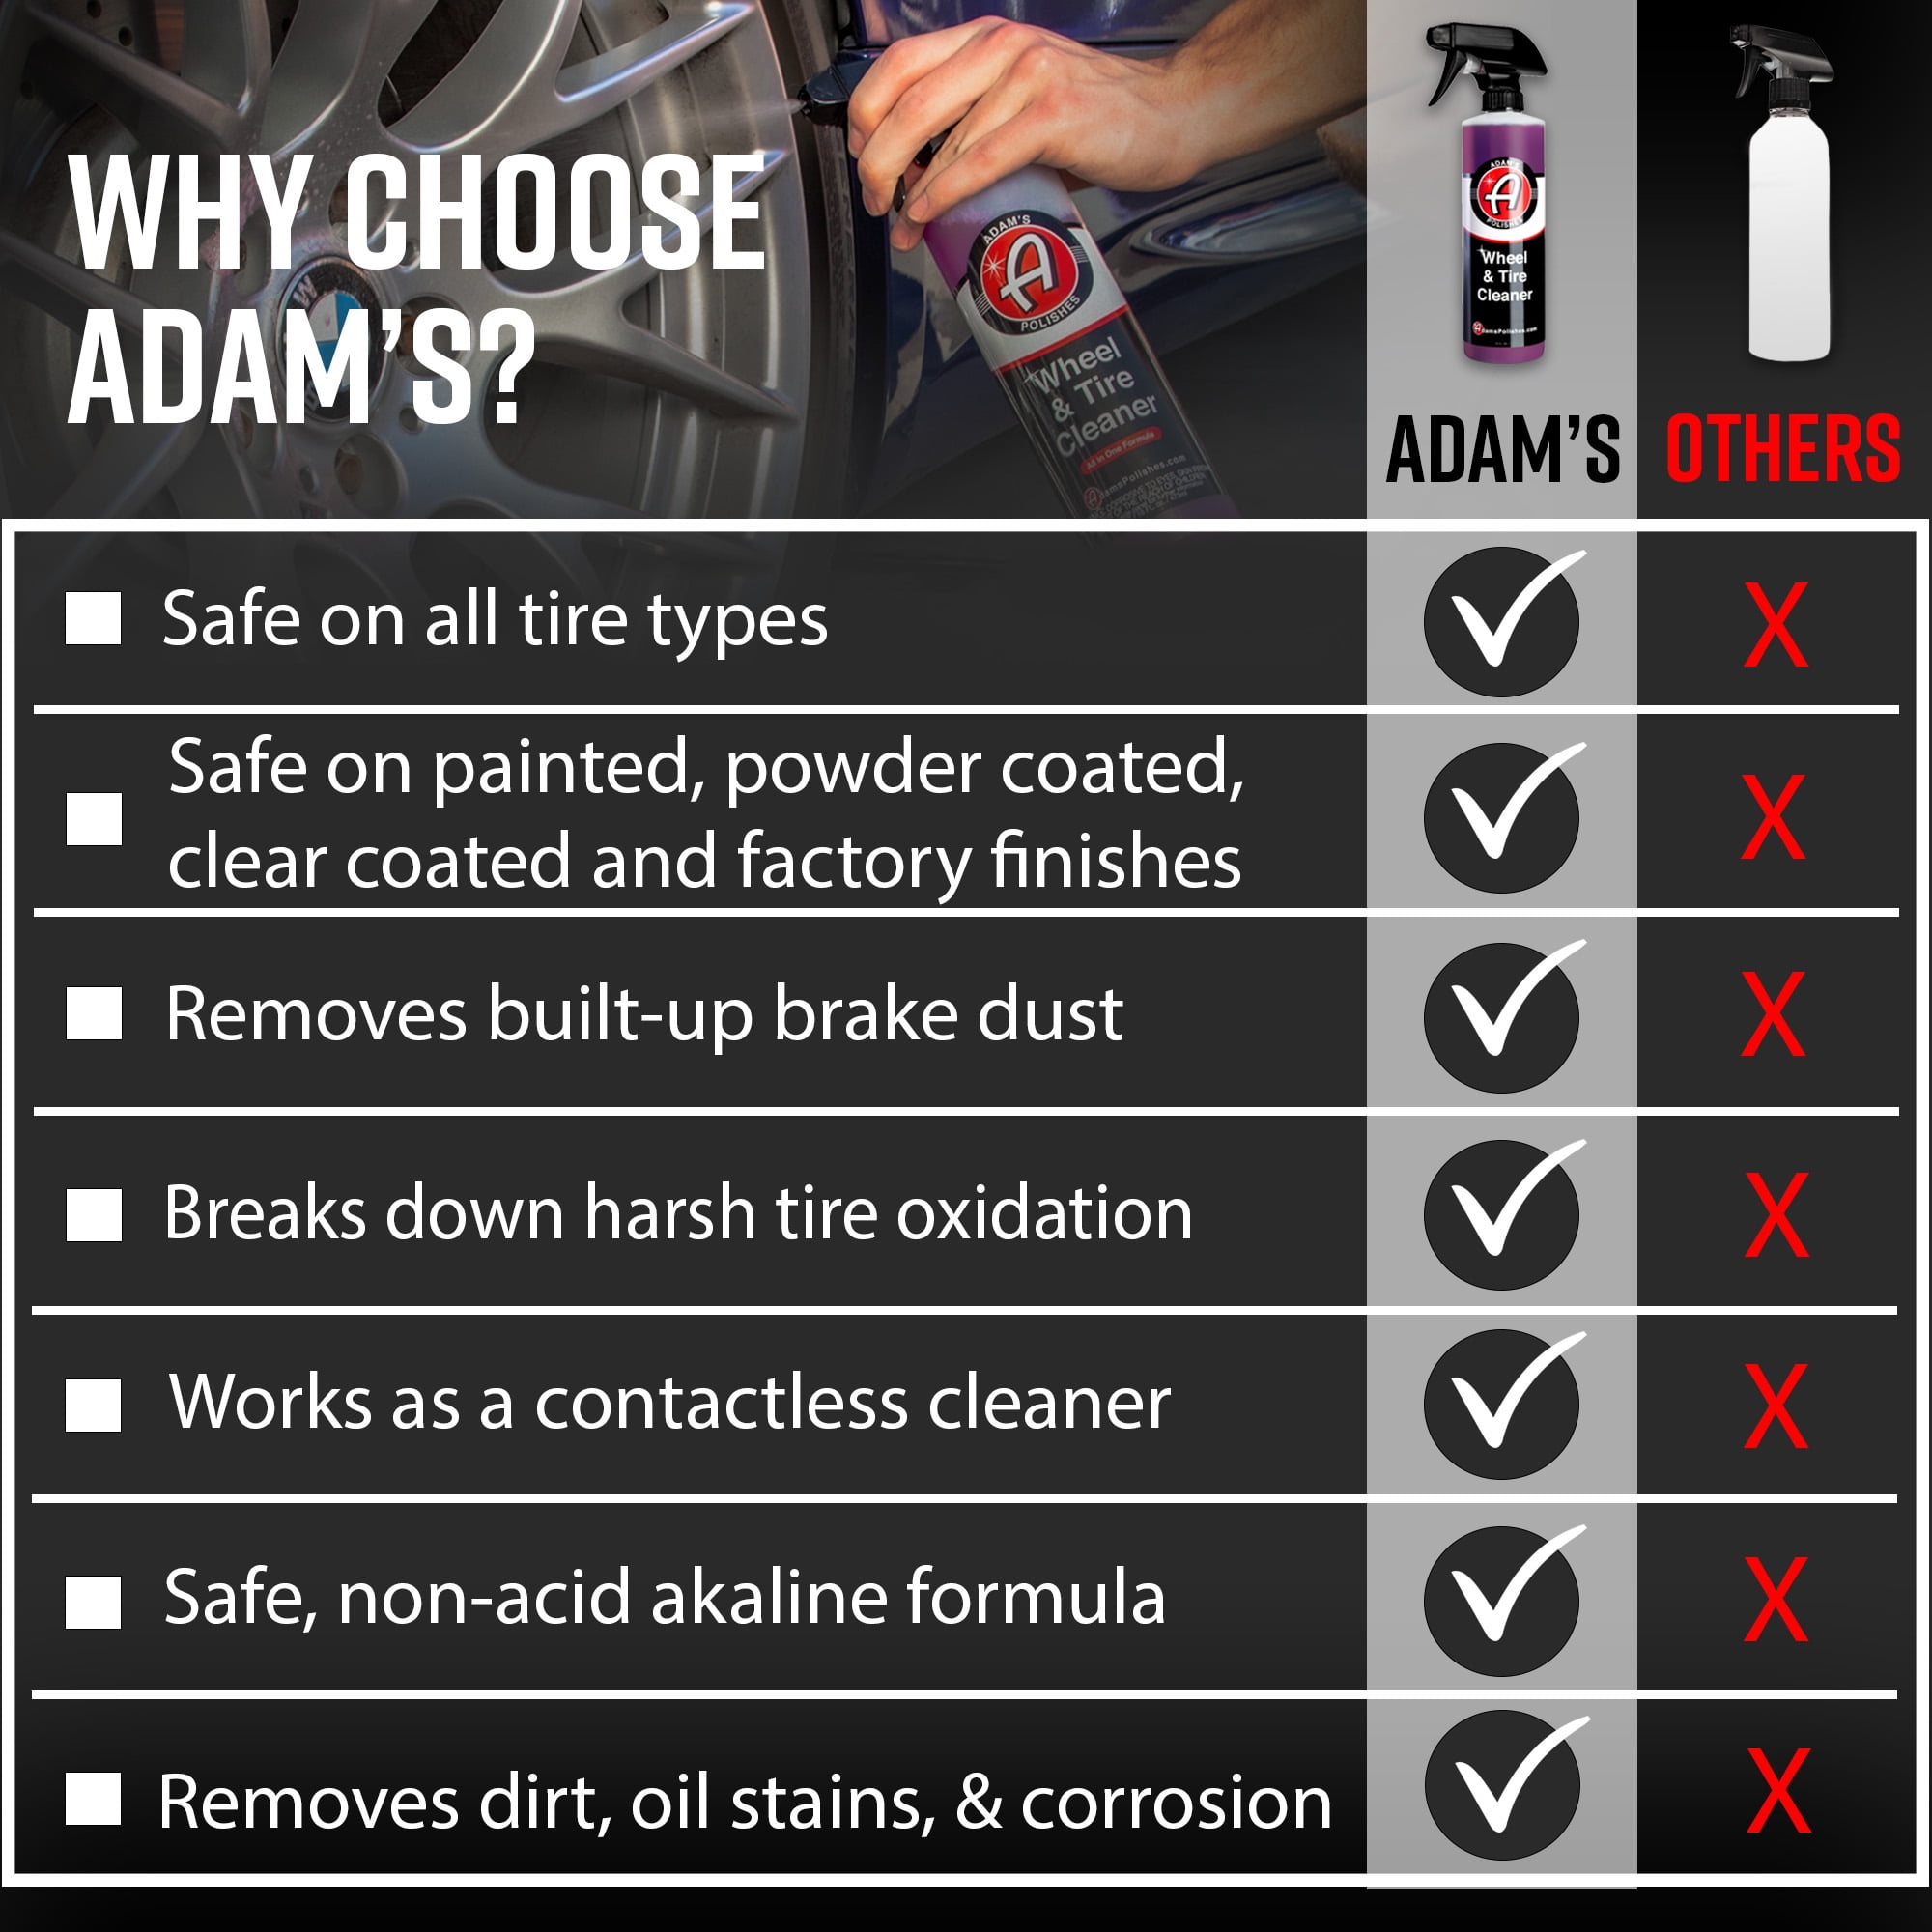 Adam's Tire Shine - Spray Tire Dressing | Detailer's Domain, 16 oz